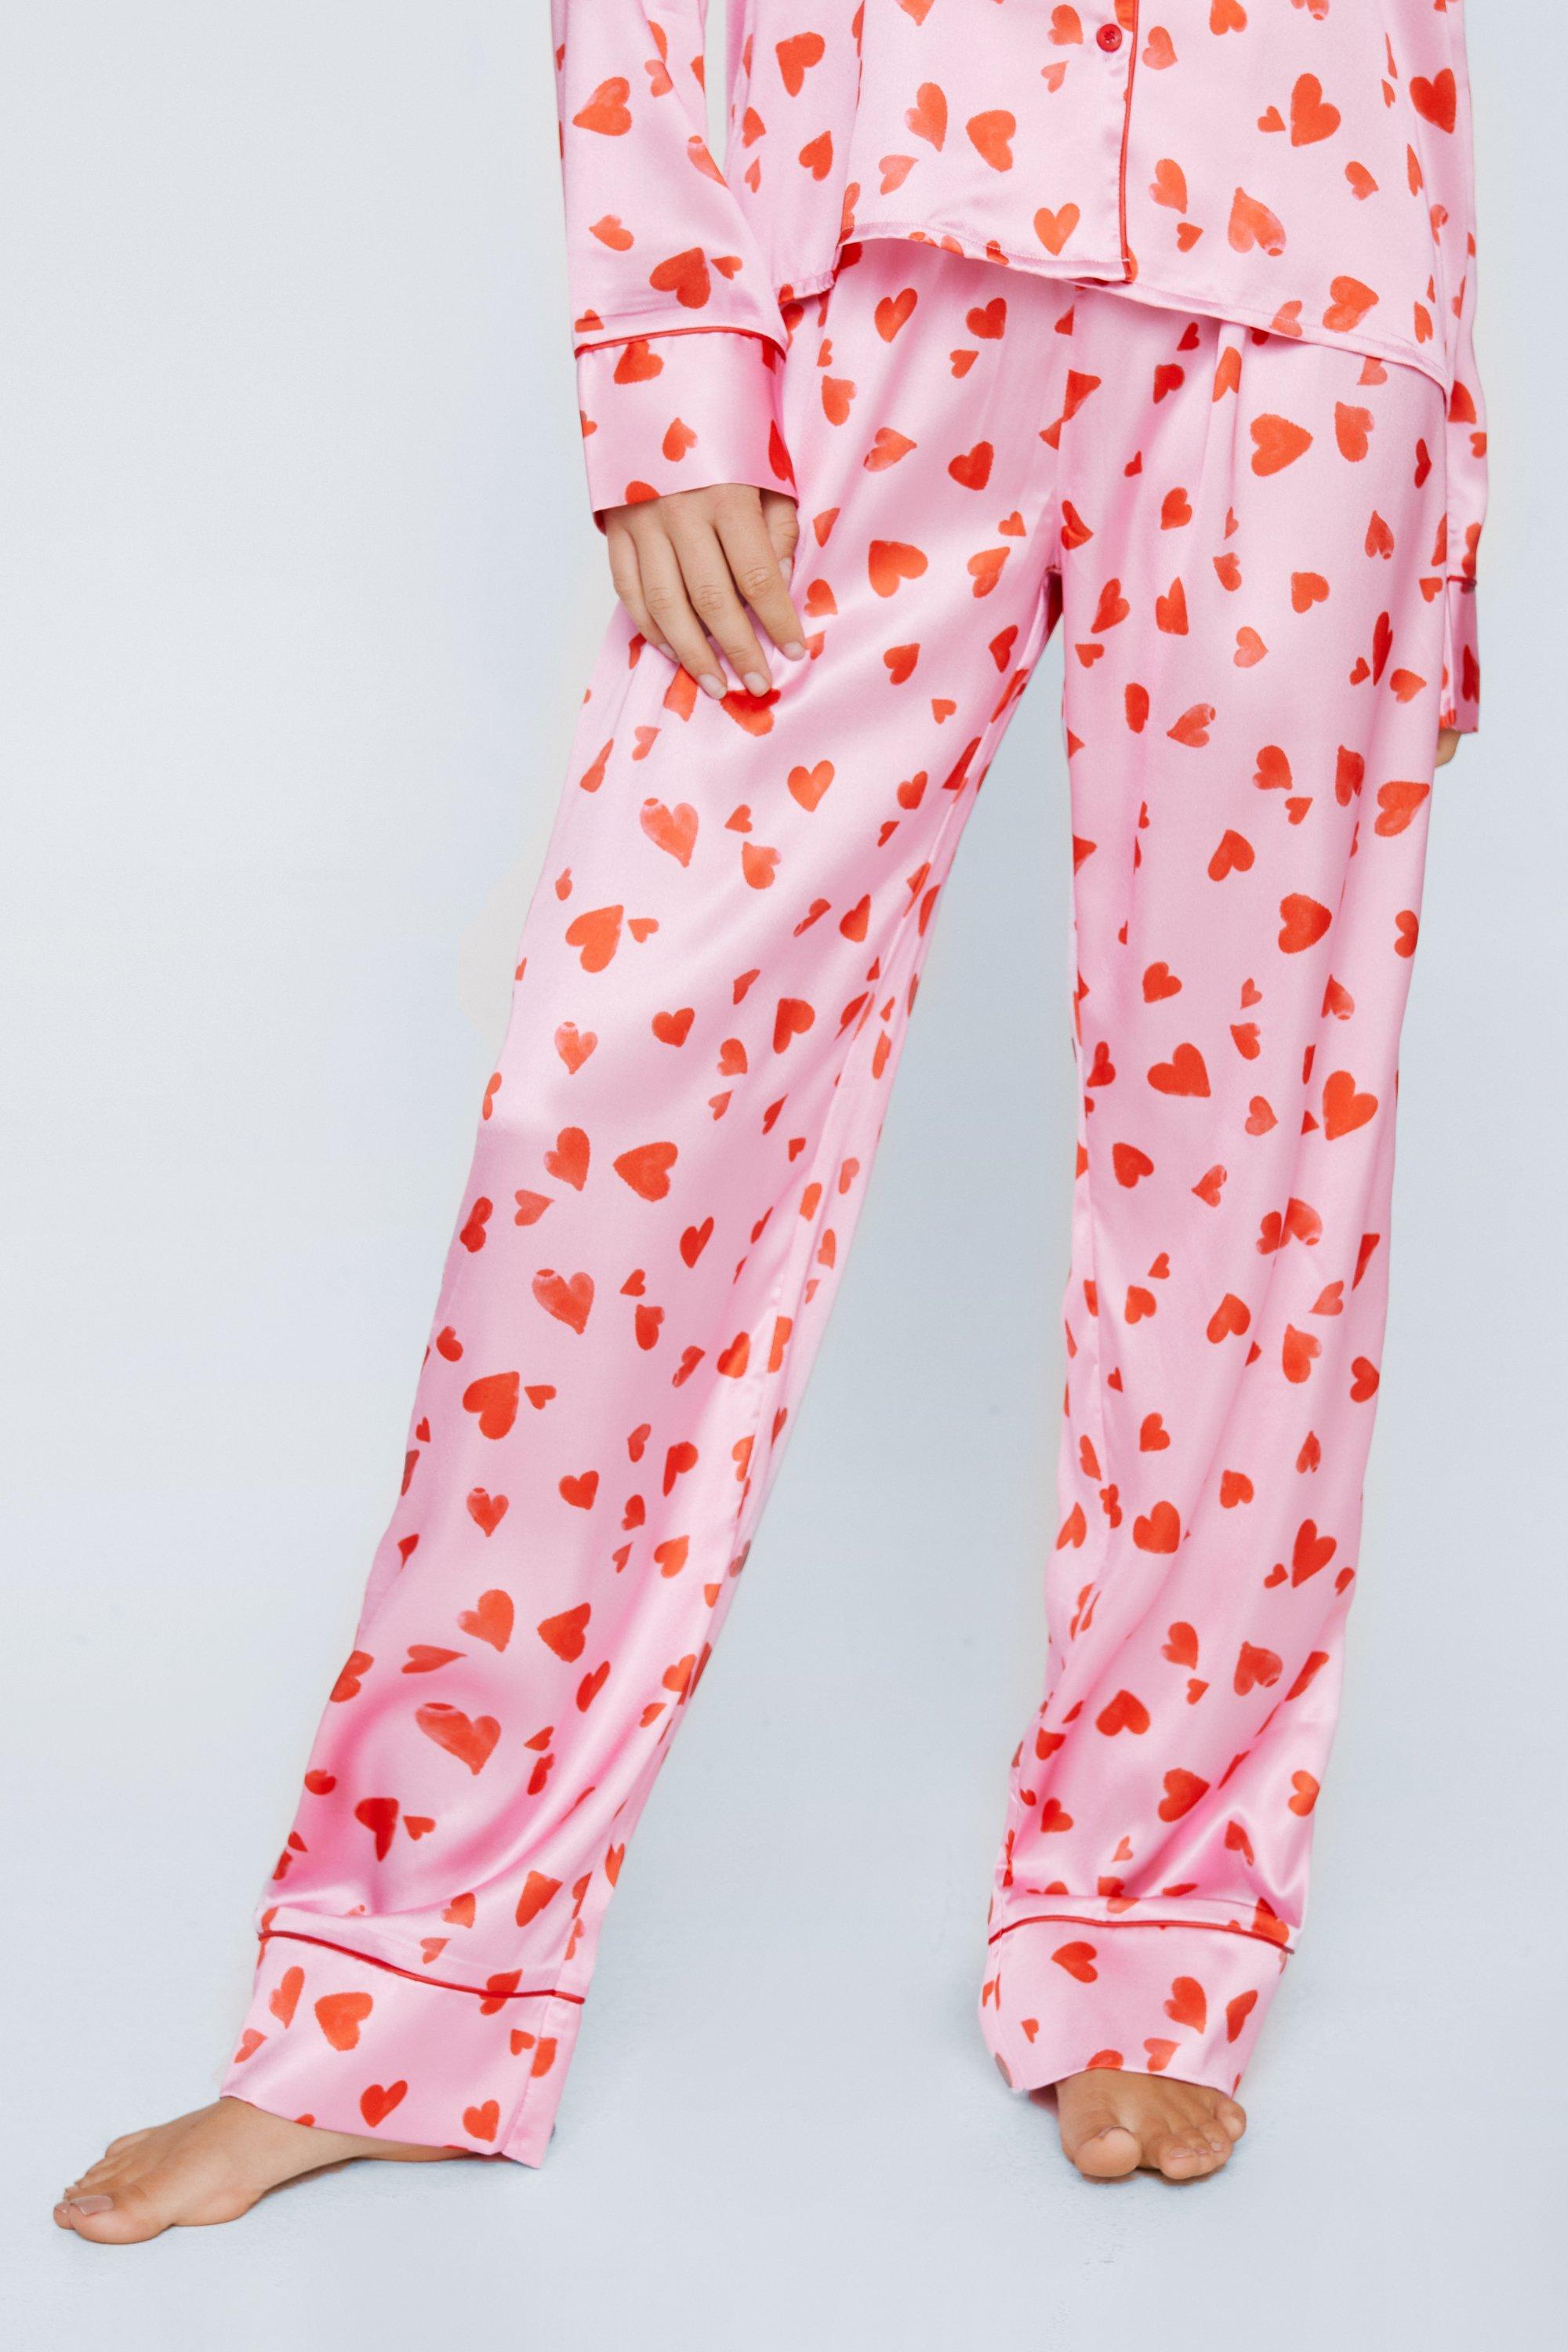 Tommy Hilfiger Women's Heart Tee & PJ Short Set - Pink Heather